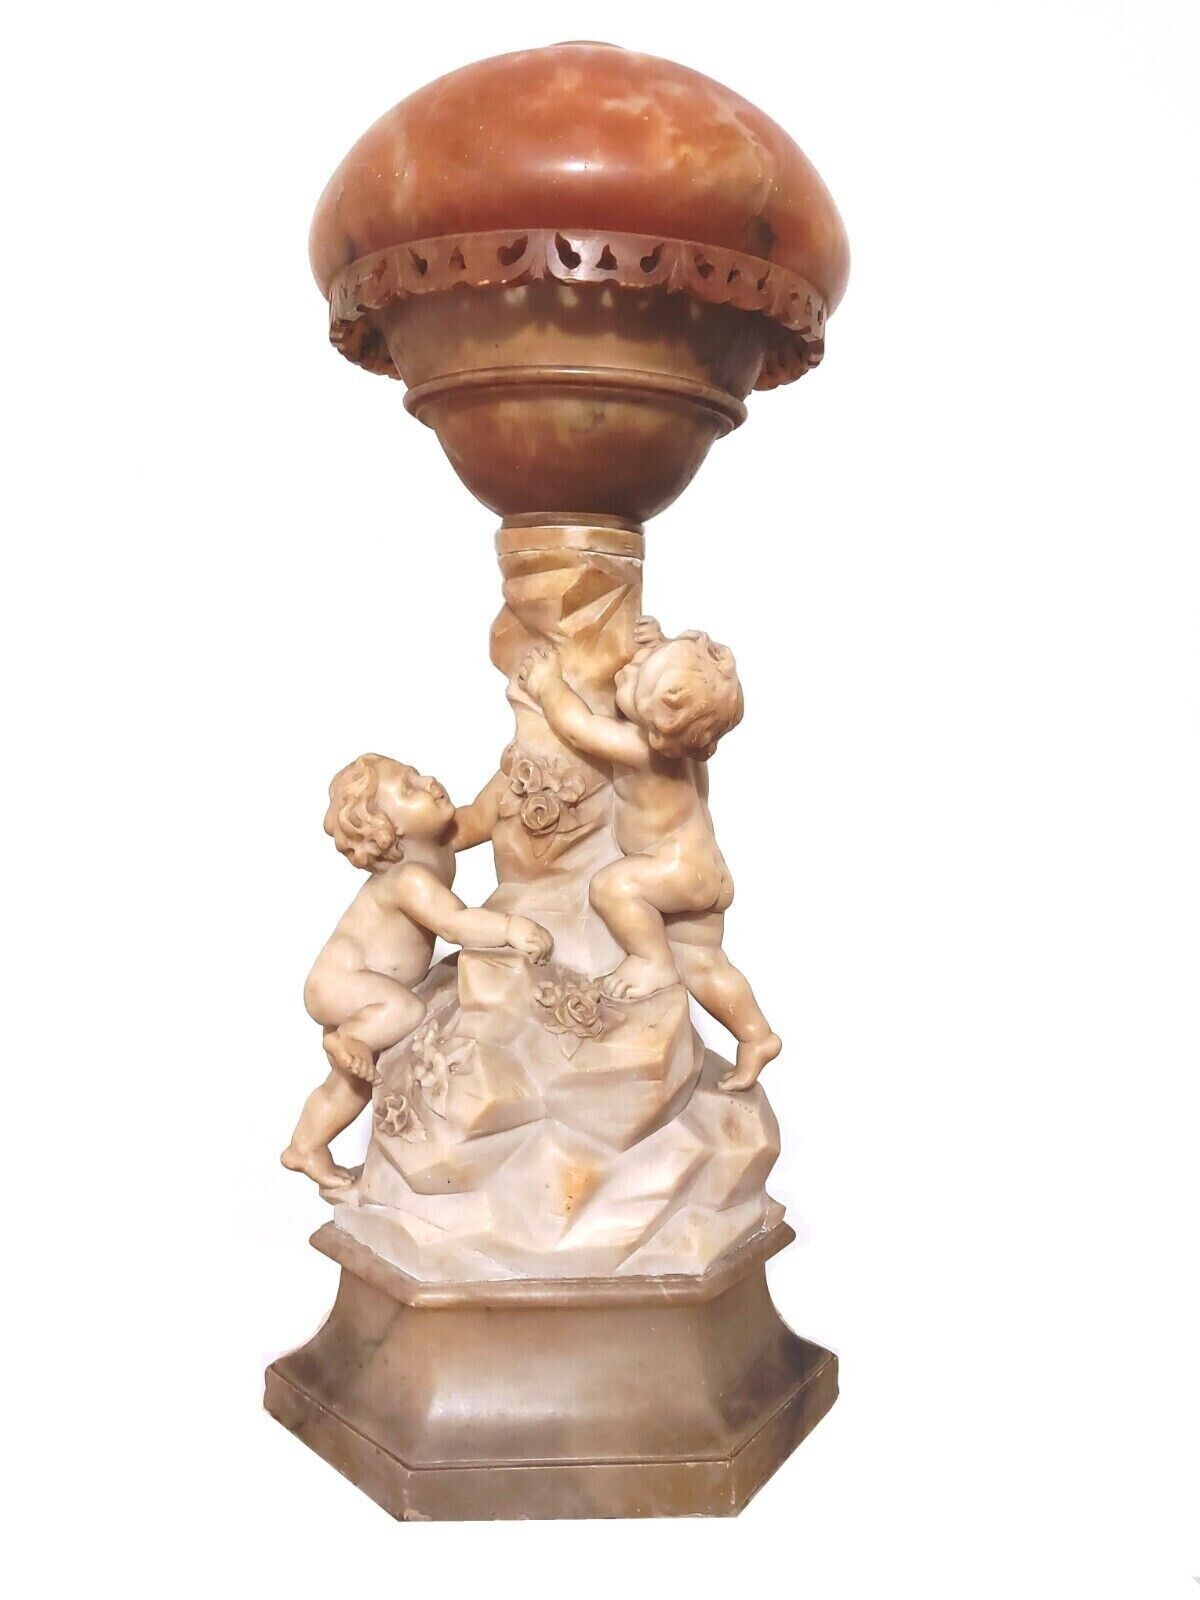 ANTIQUE LARGE 30¨ ITALIAN ALABASTER FIGURAL LAMP SCULPTURE CHILD CHERUB BY CONT